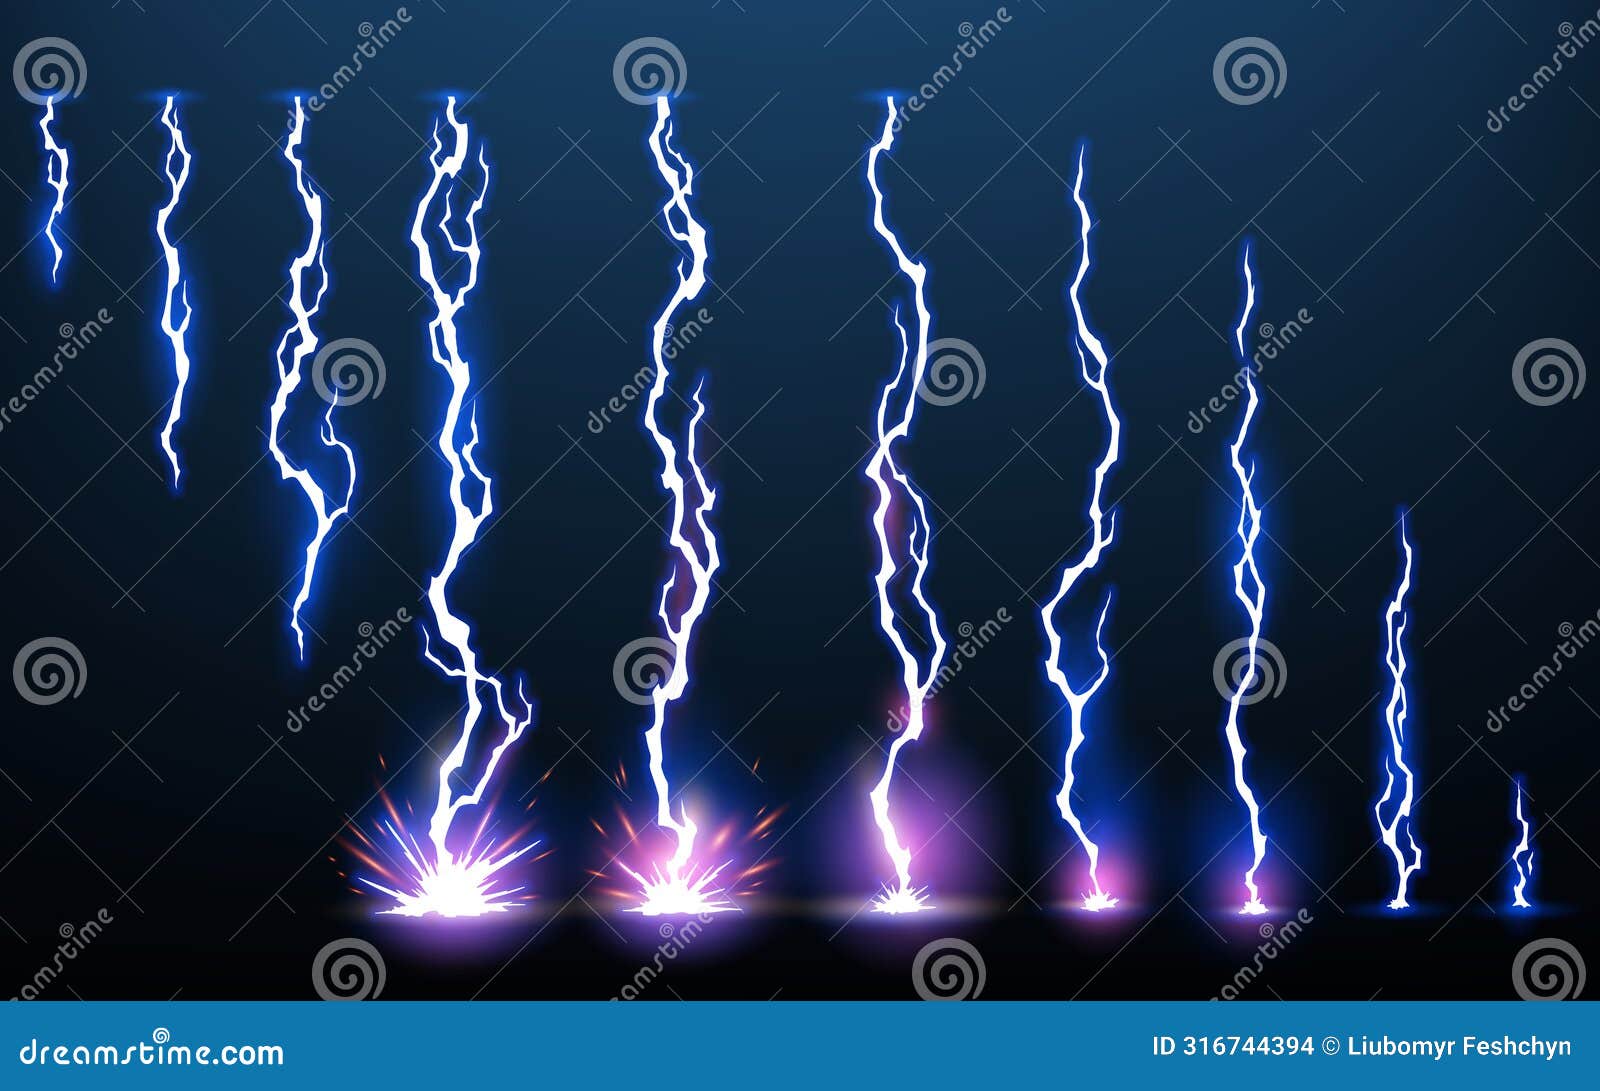 lightning animation set with sparks. electricity thunderbolt danger, light electric powerful thunder. bright energy